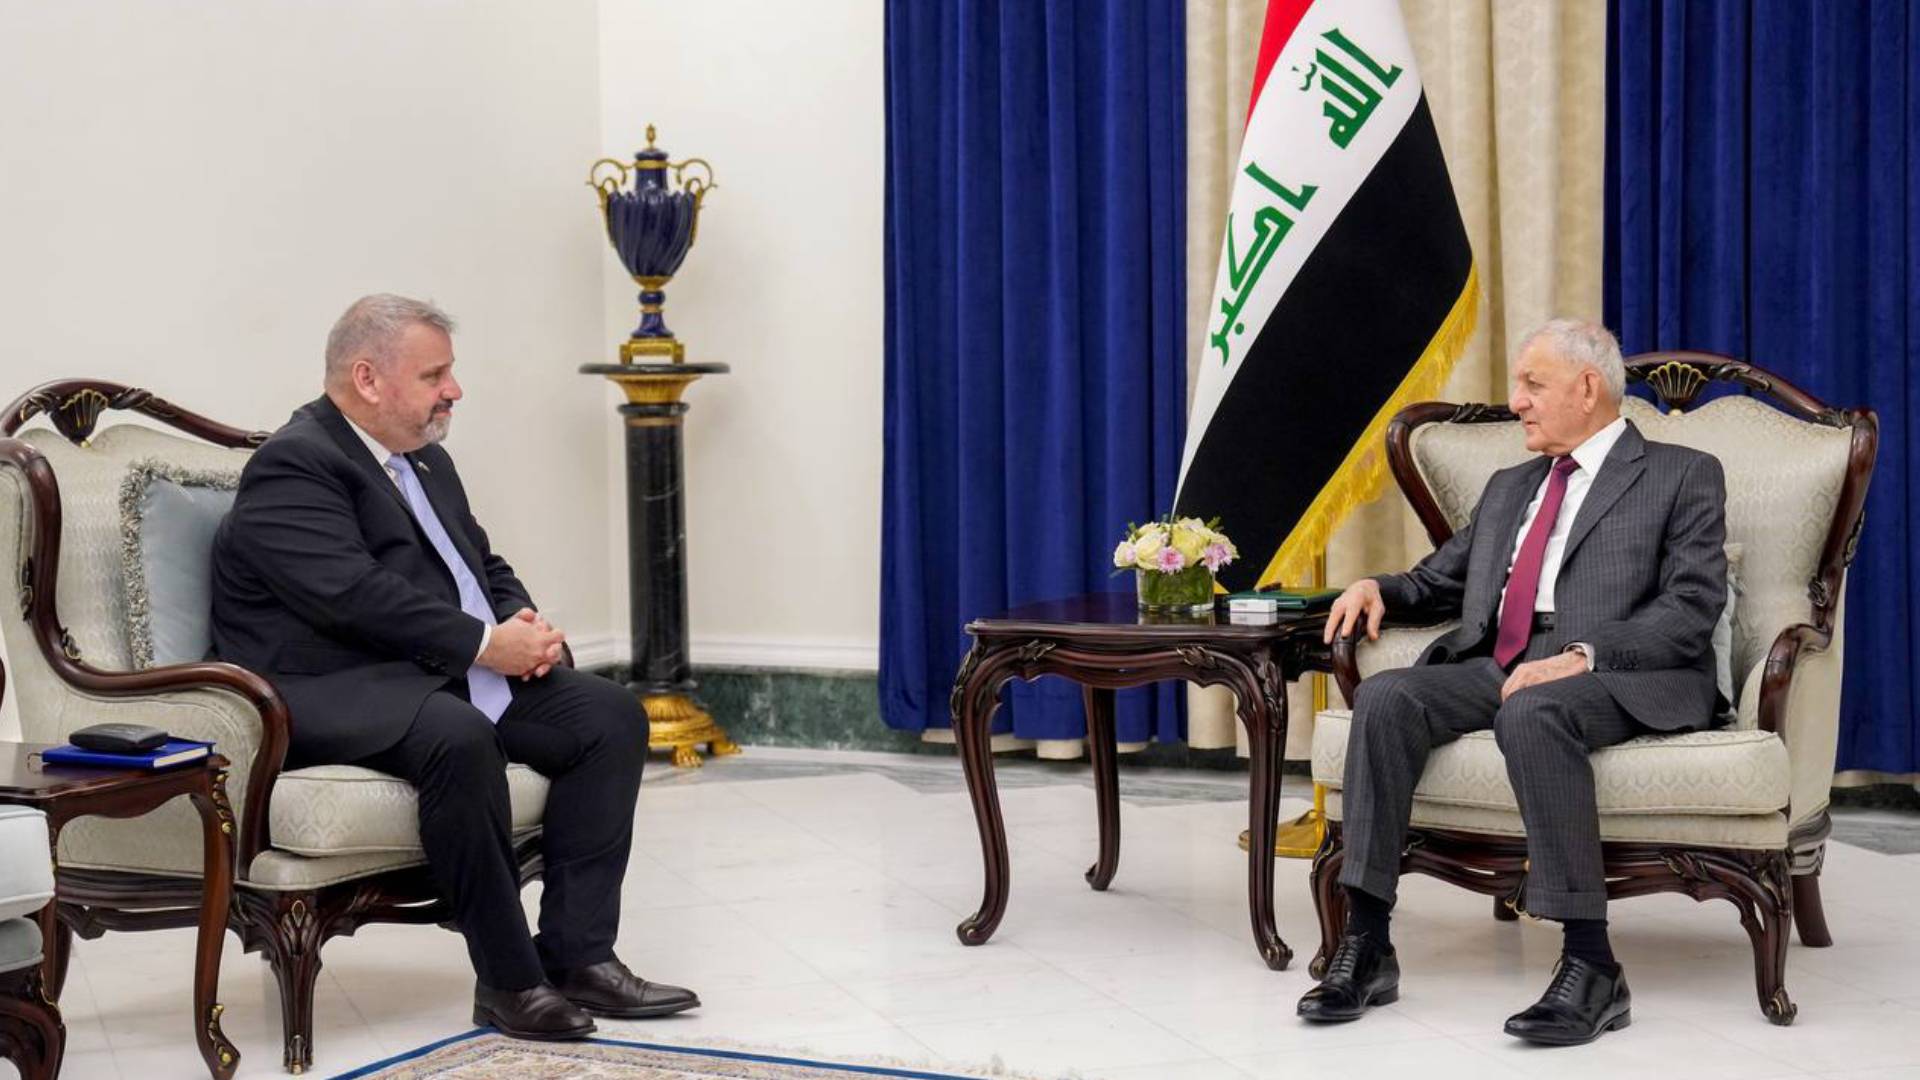  Iraqi President Abdullatif Jamal Rashid on the right and EU Ambassador Thomas Seiler on the left.